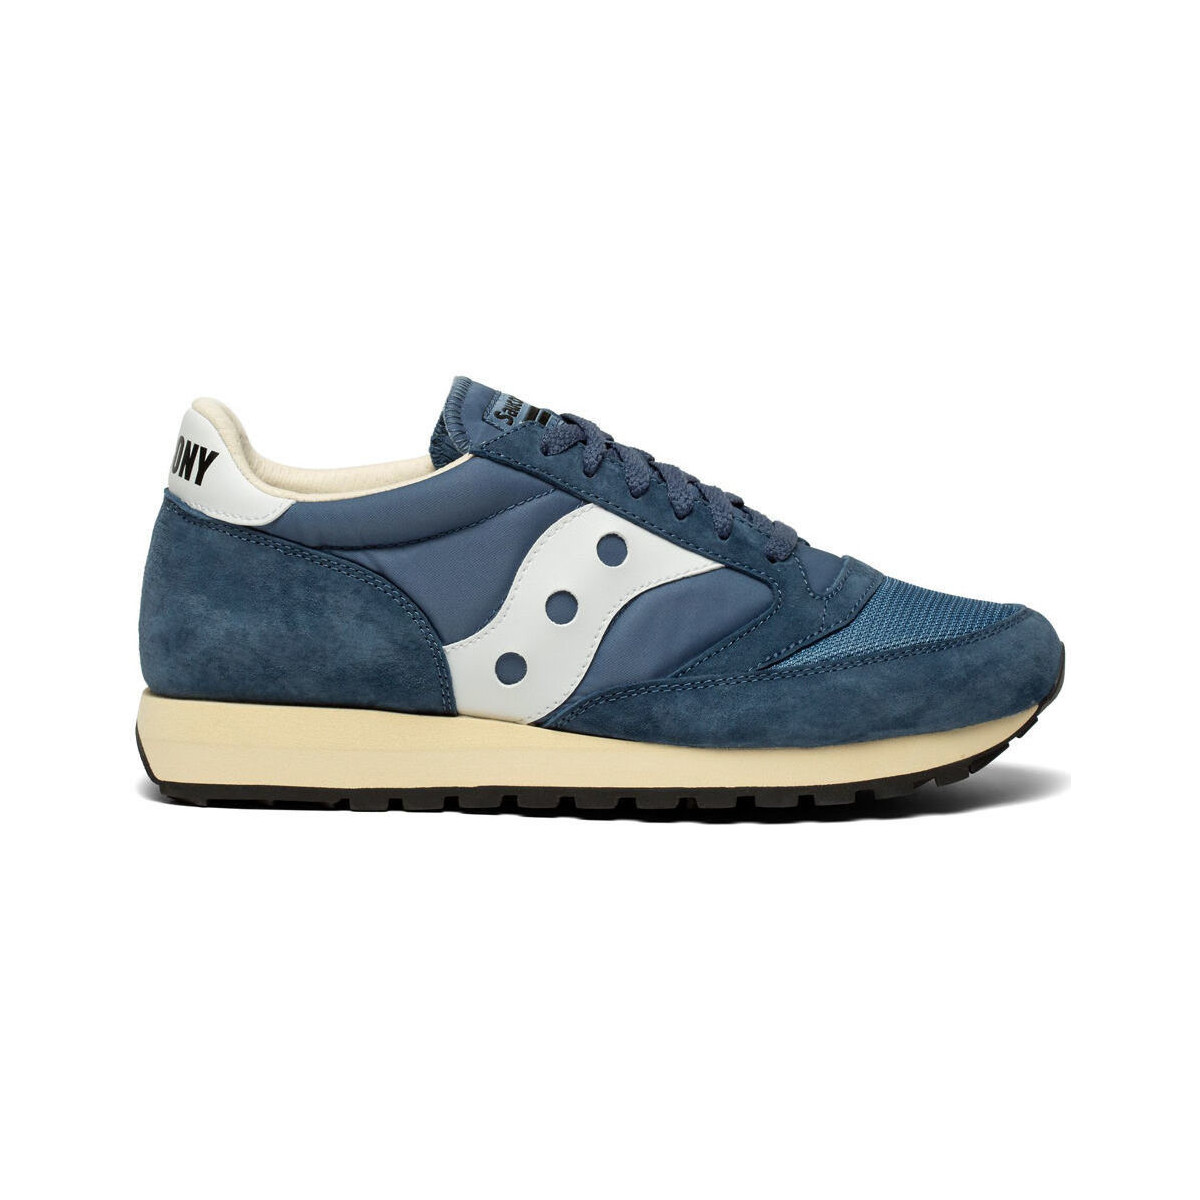 Schuhe Herren Sneaker Saucony Jazz 81 S70613 5 Blue/White Blau